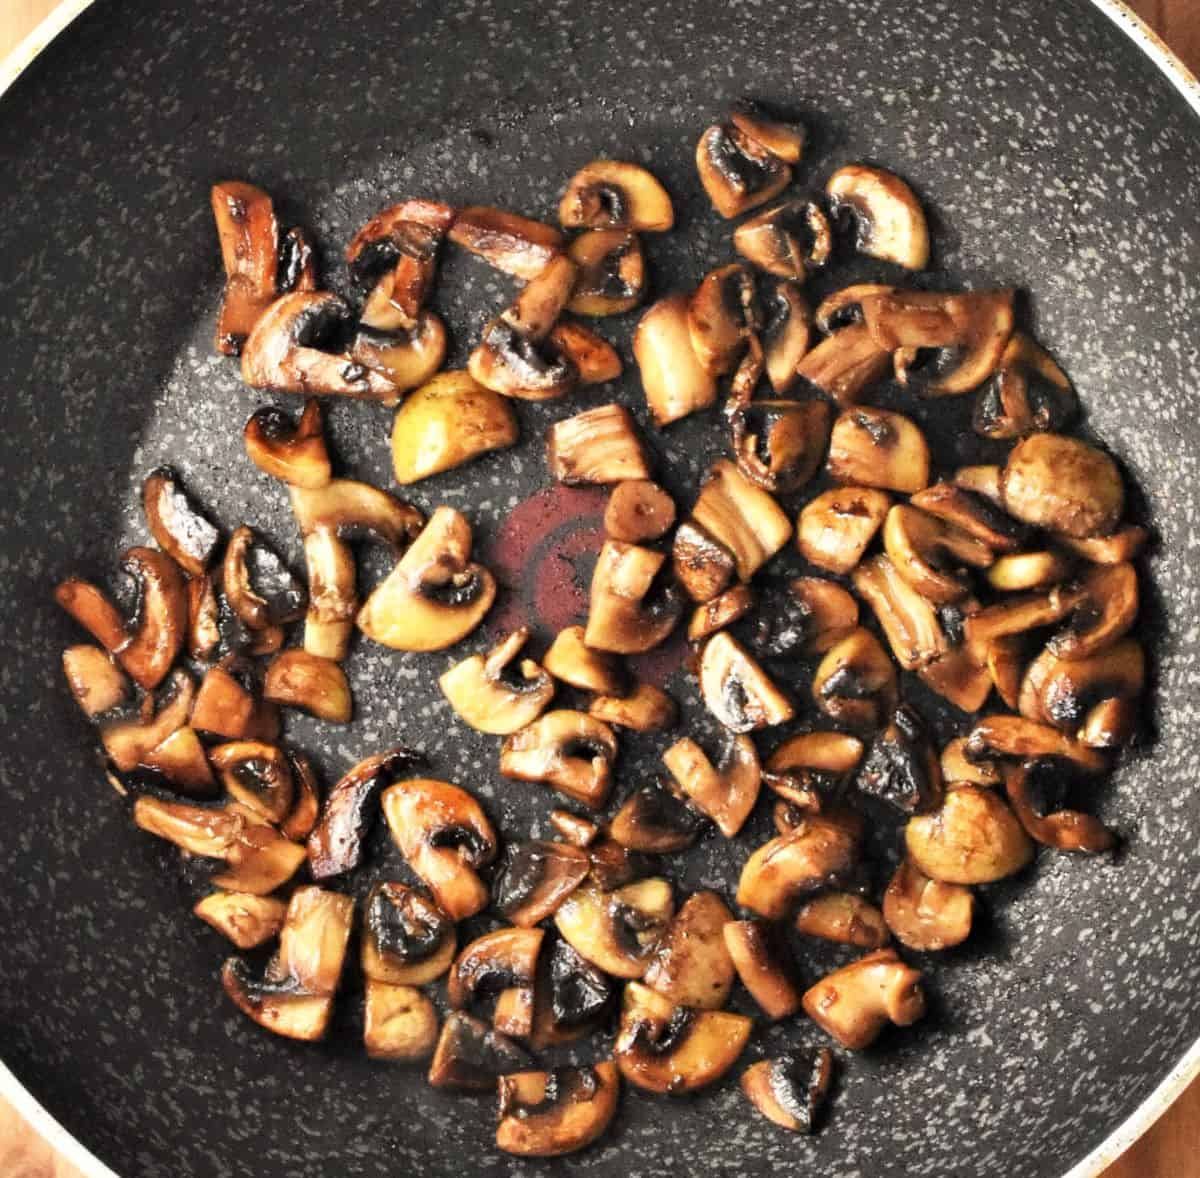 Cooking chopped mushrooms in pan.